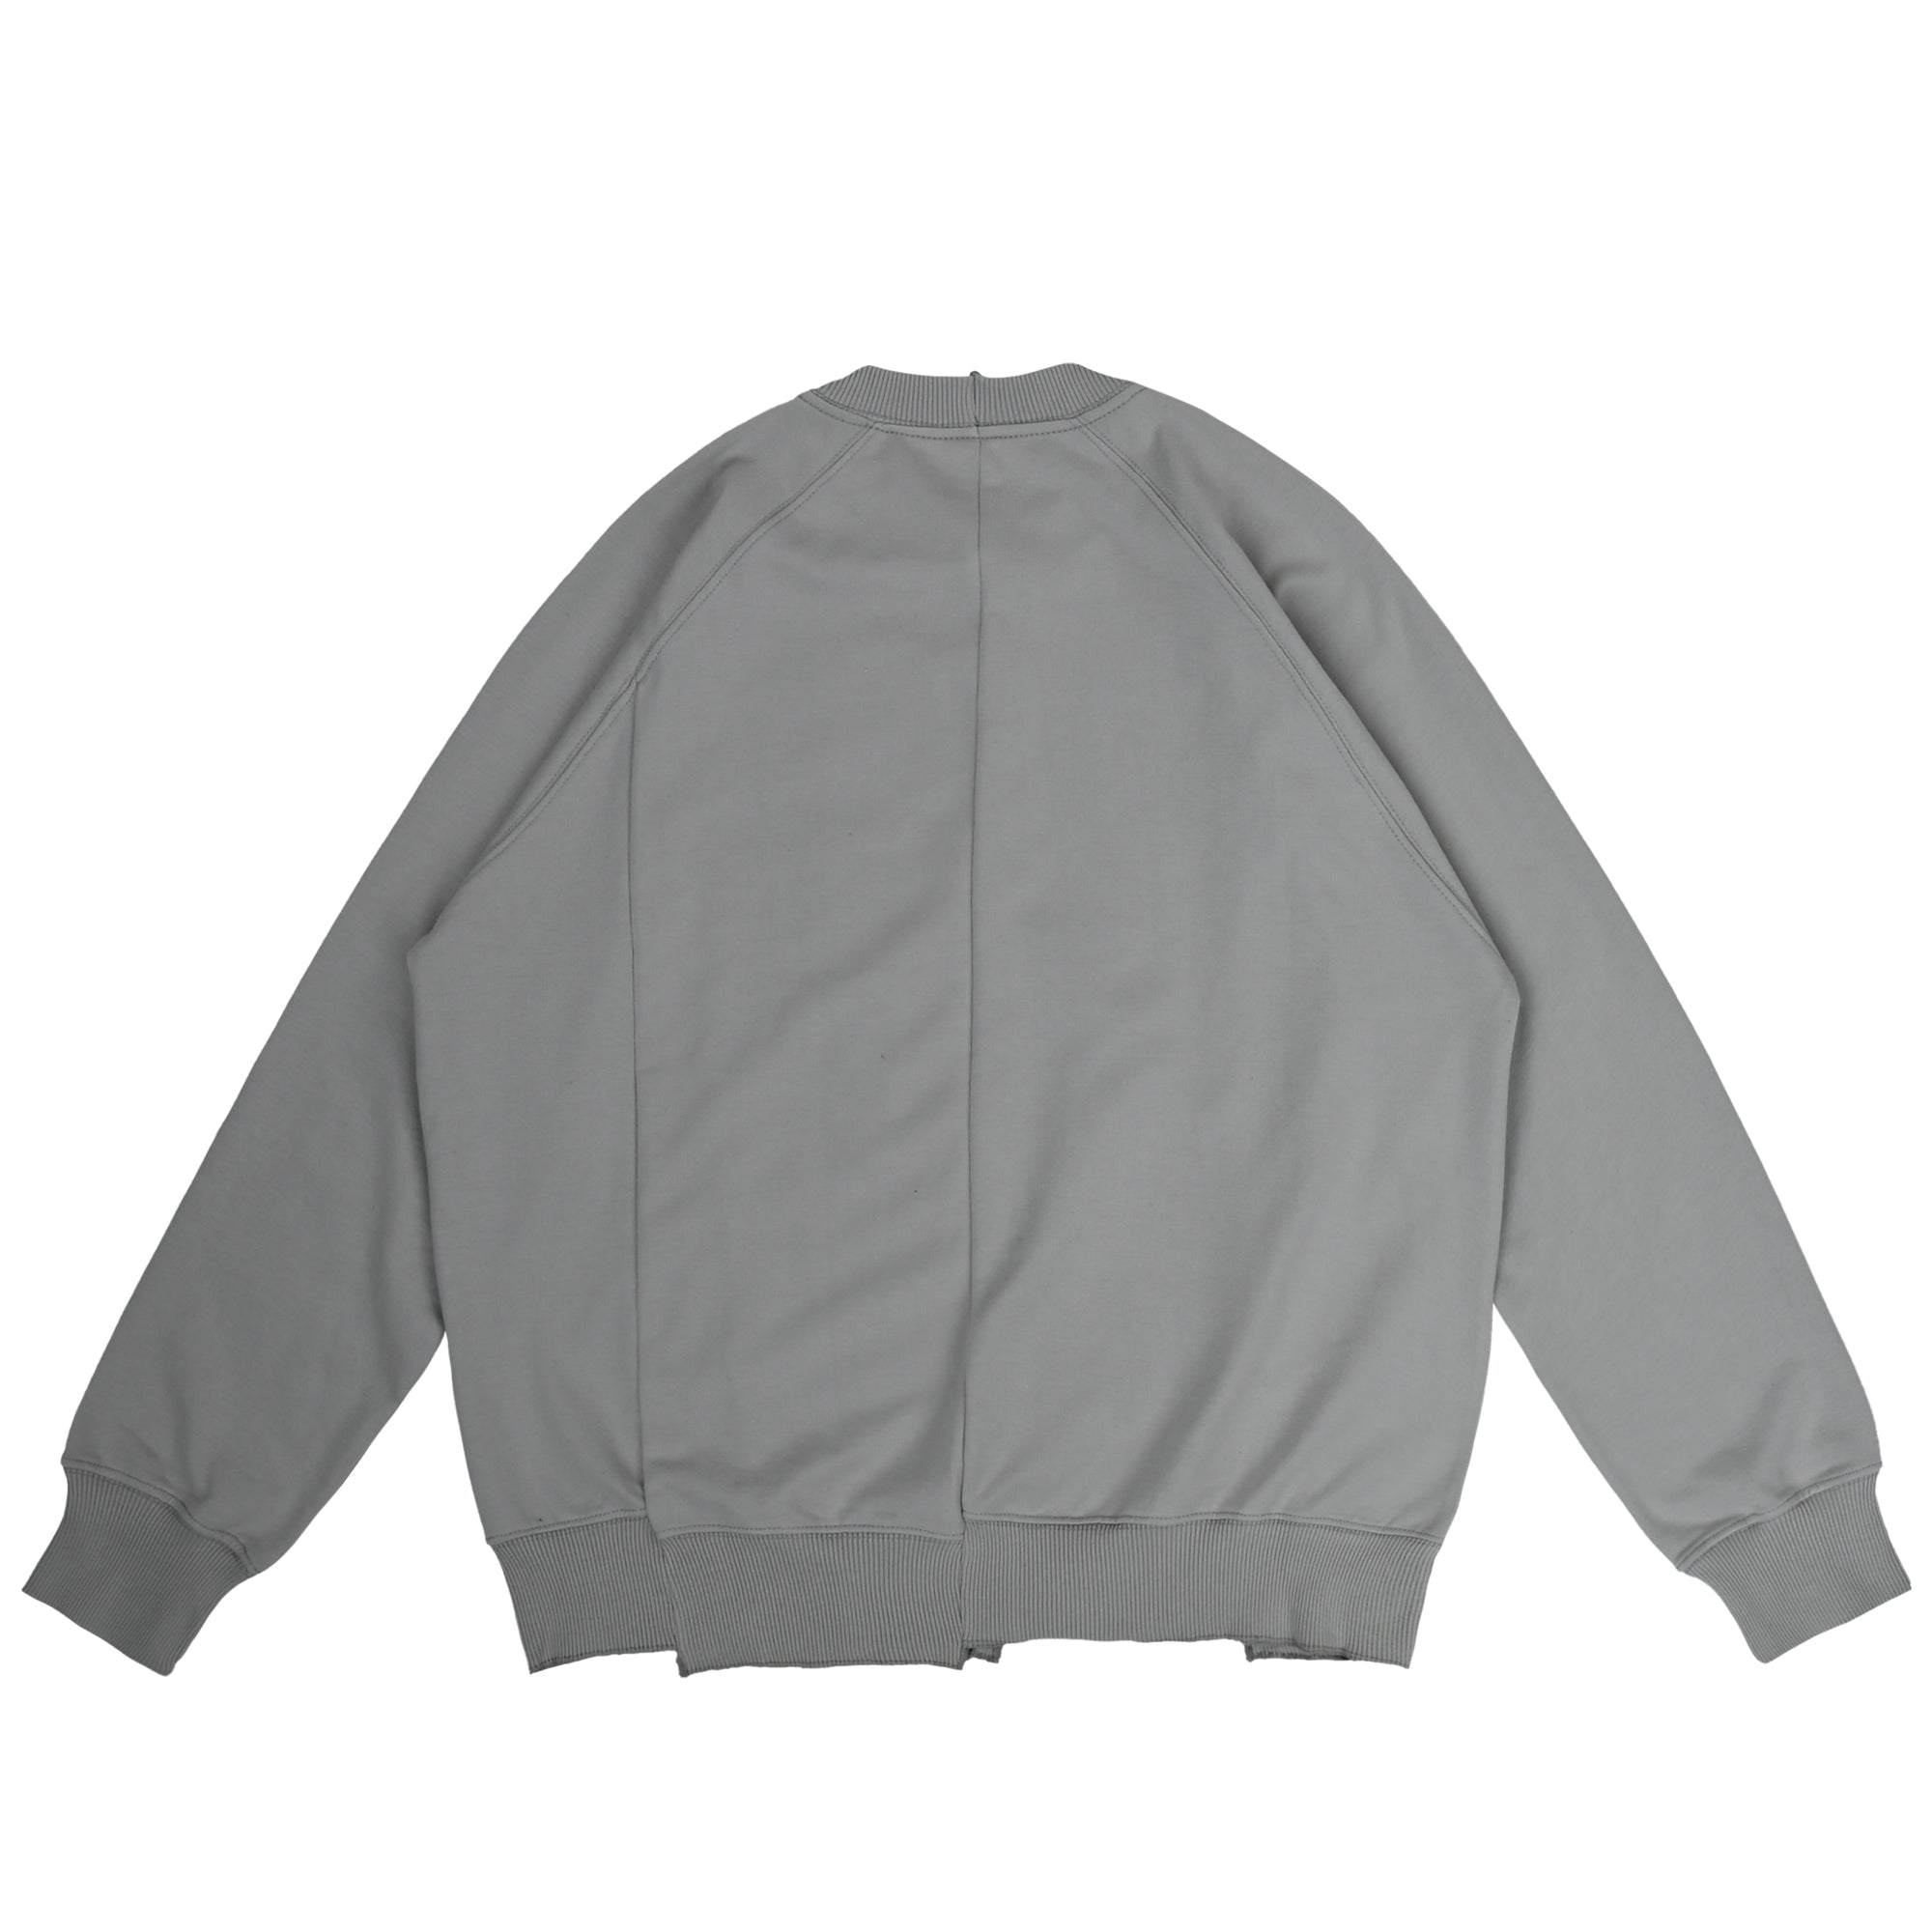 The Salvages 'Sublime' Reconstructed Raglan Sweatshirt in Grey